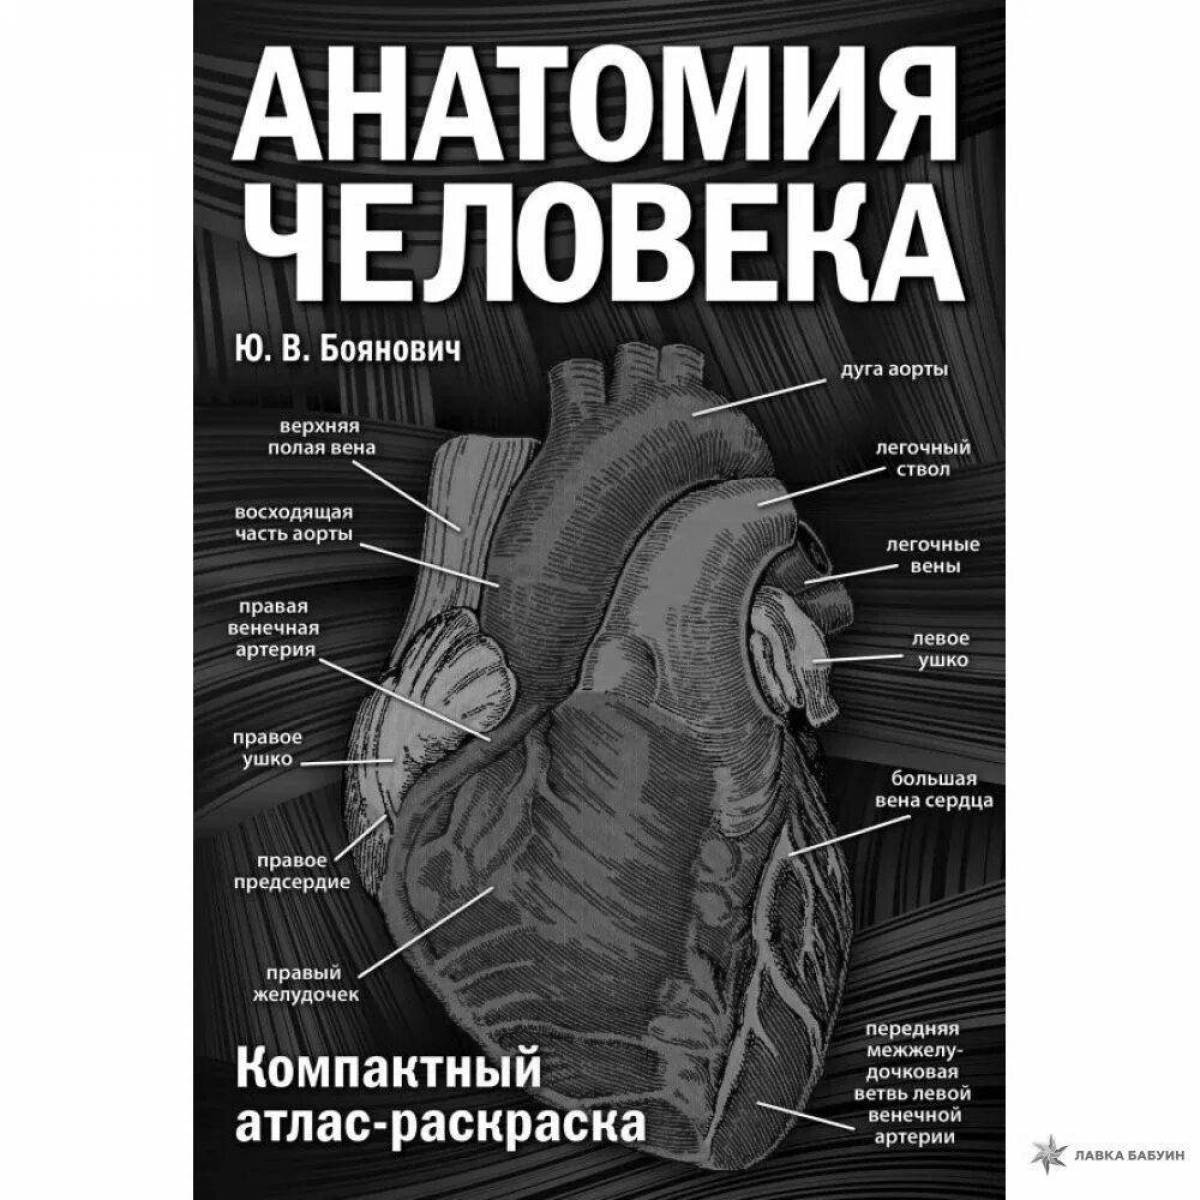 Terrific atlas of human anatomy pdf